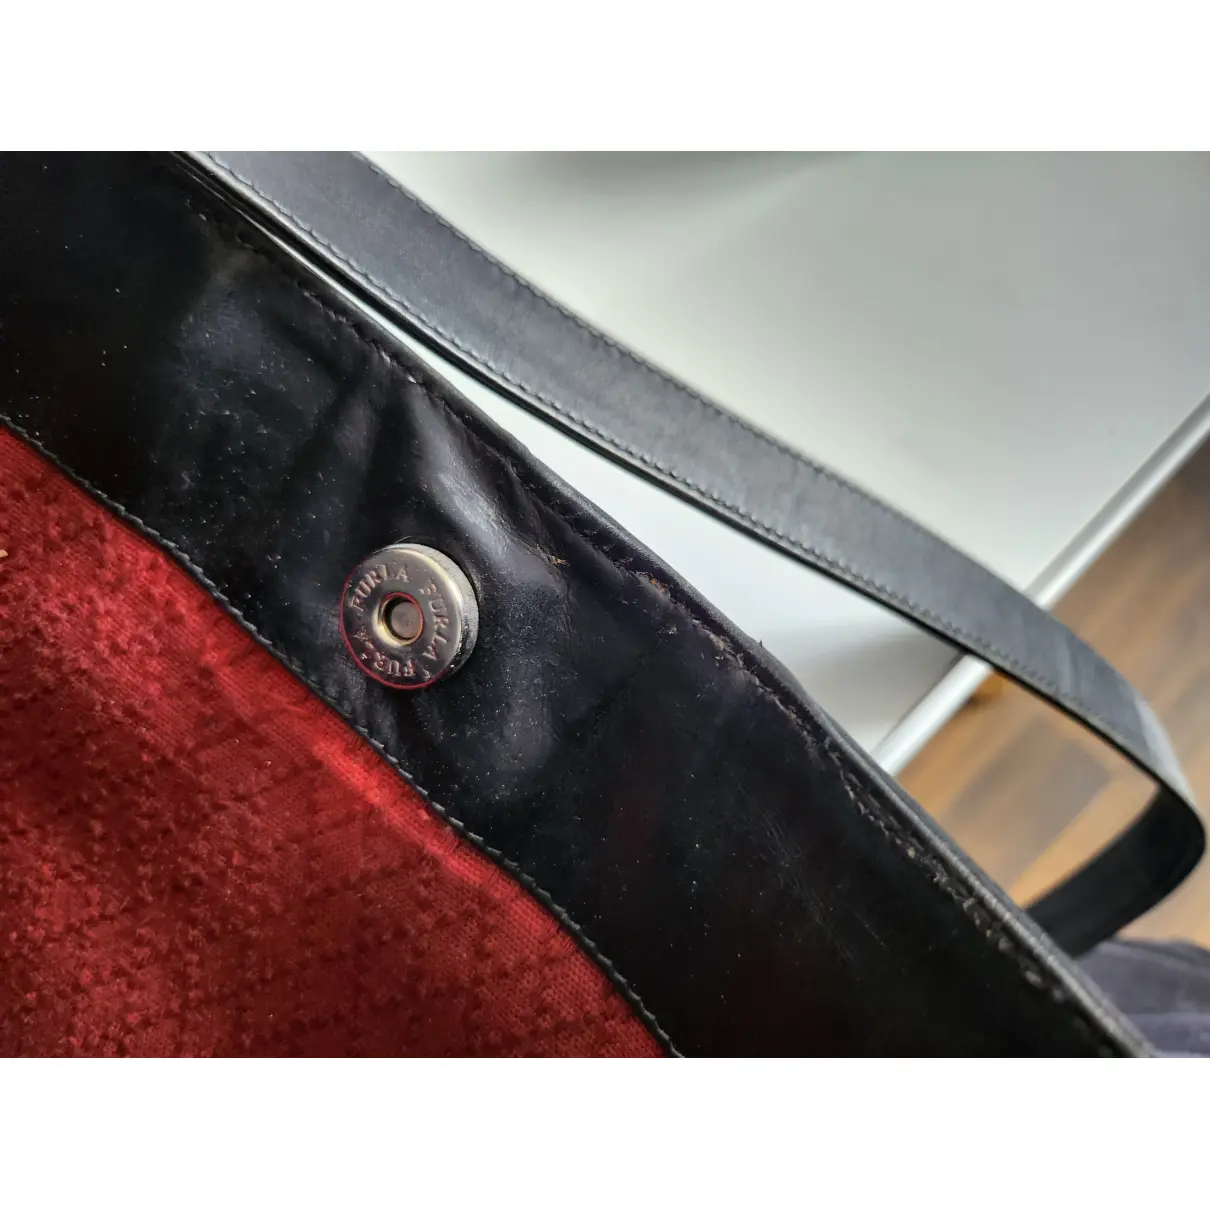 Ophidia Hobo cloth handbag Gucci - Vintage